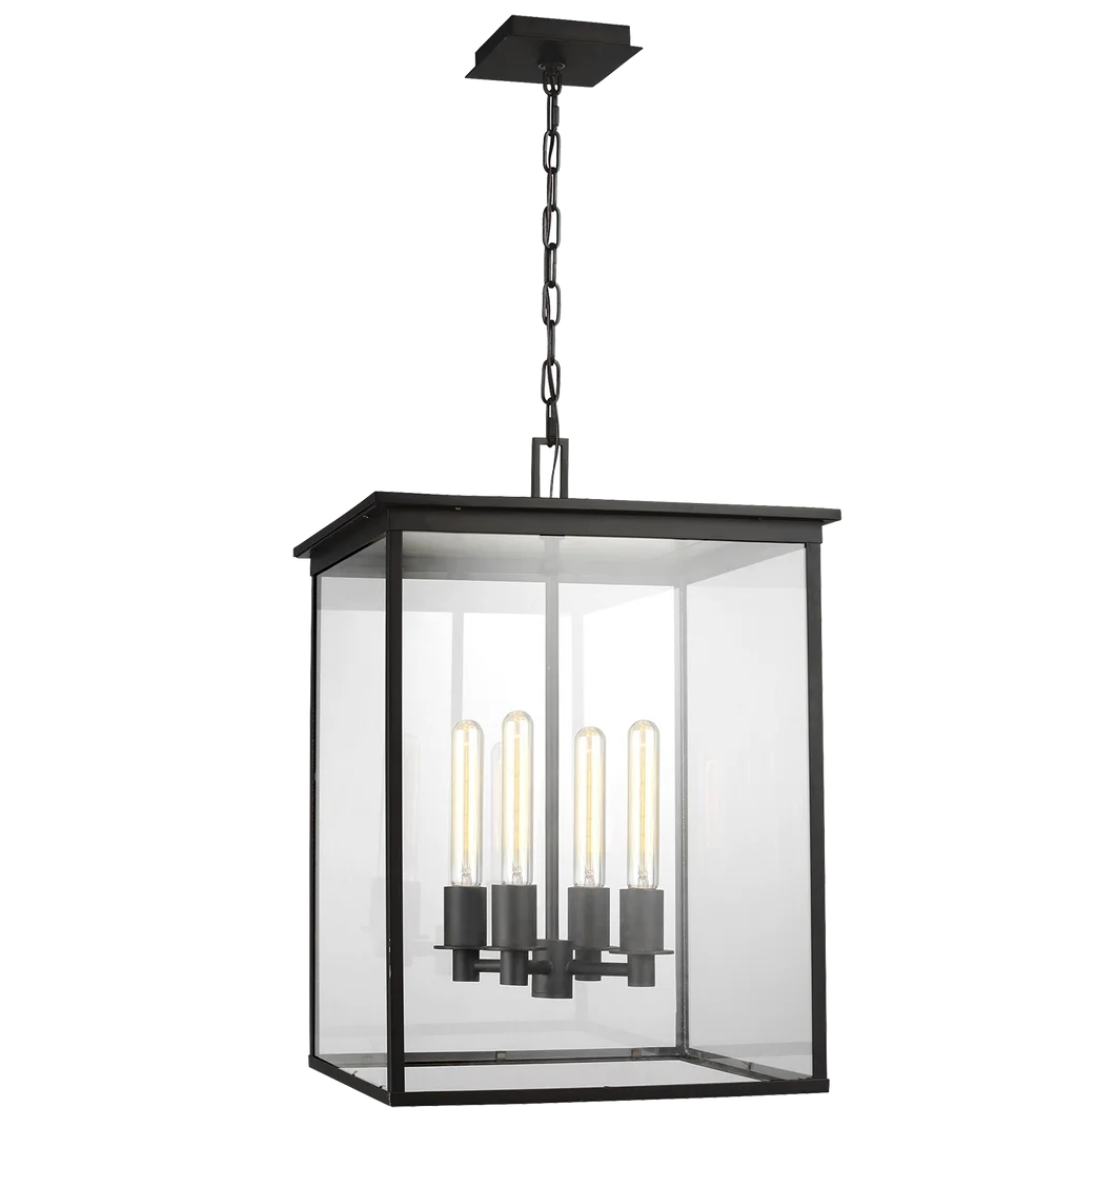 Illuminate Your Outdoor Space with Freeport Medium Hanging Lantern